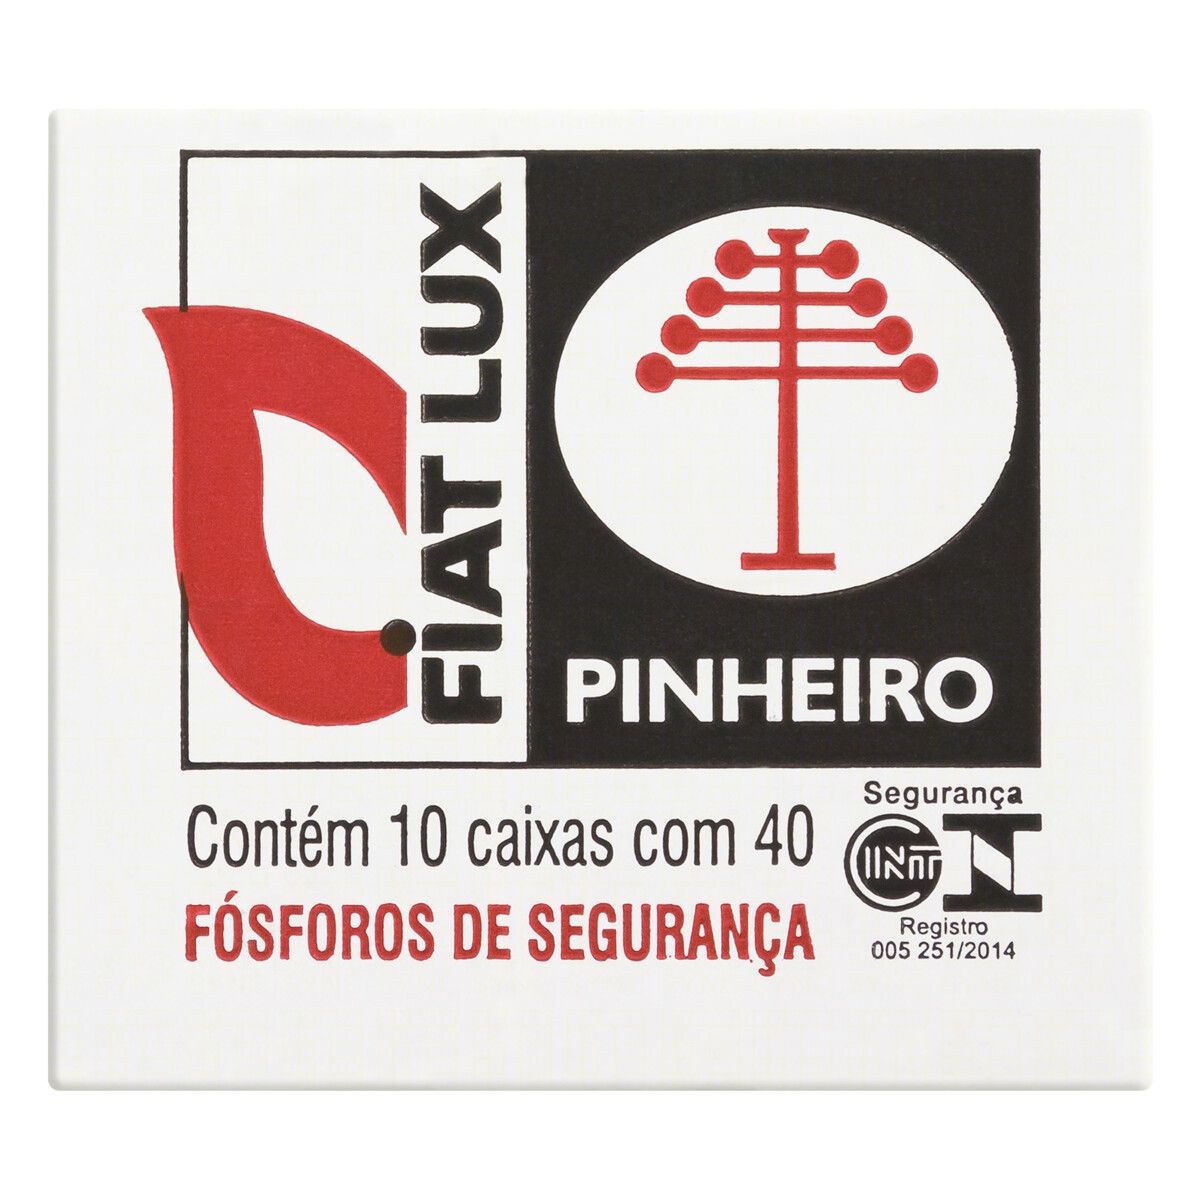 Fósforo de Segurança Fiat Lux Pinheiro 10 Unidades